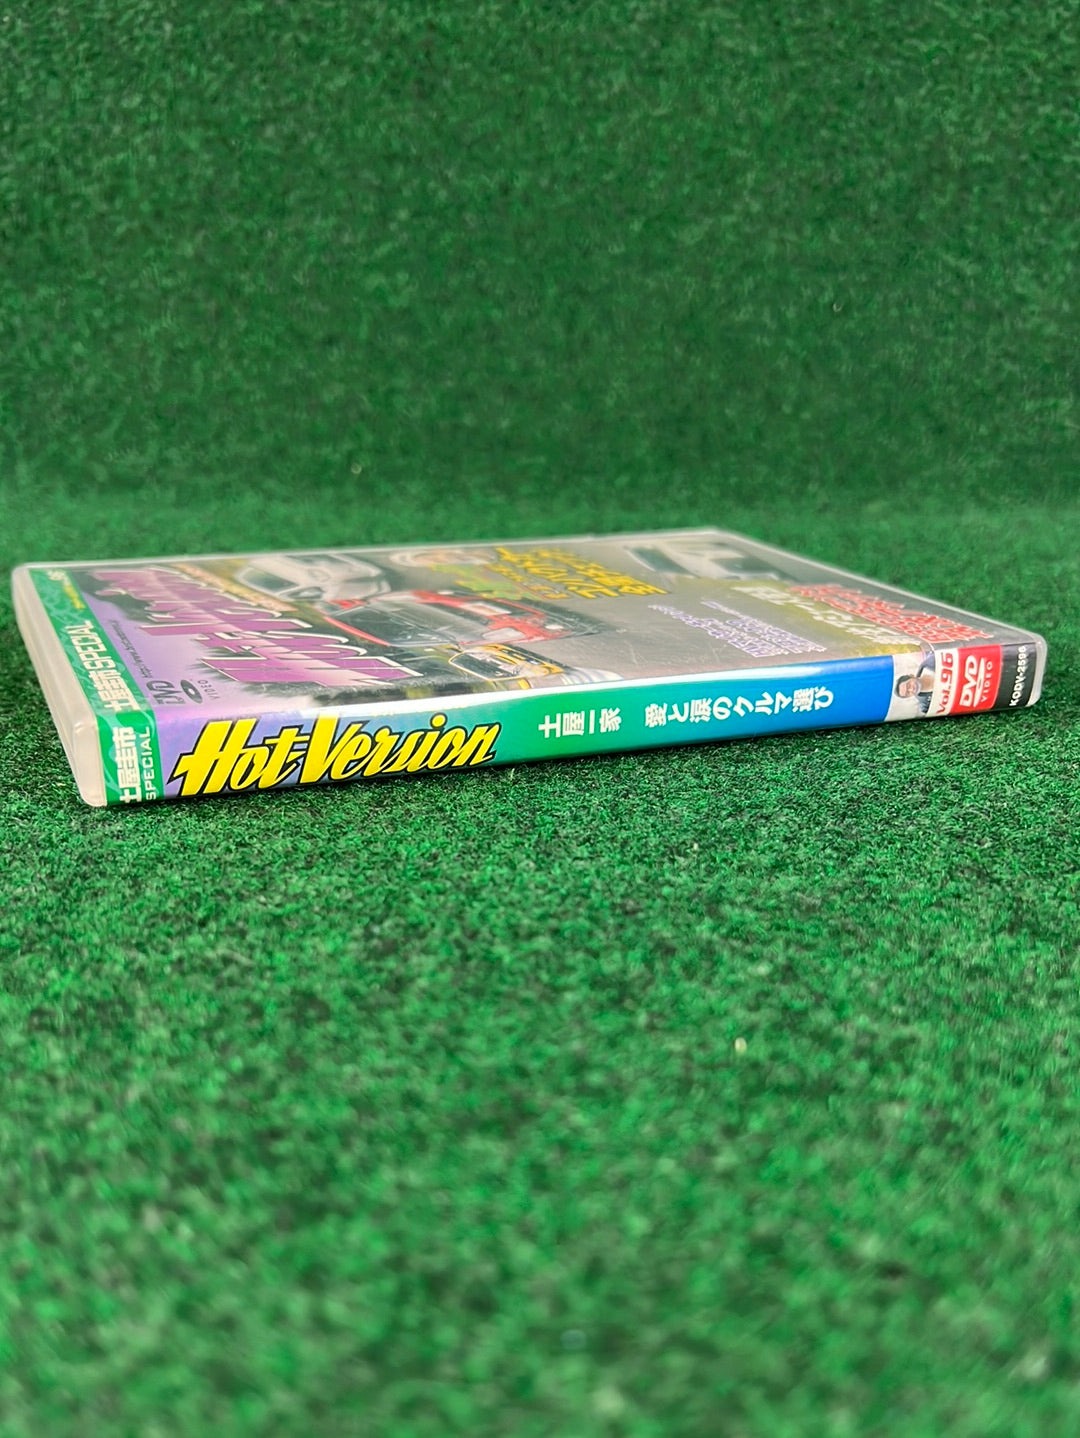 Hot Version DVD - Vol. 96